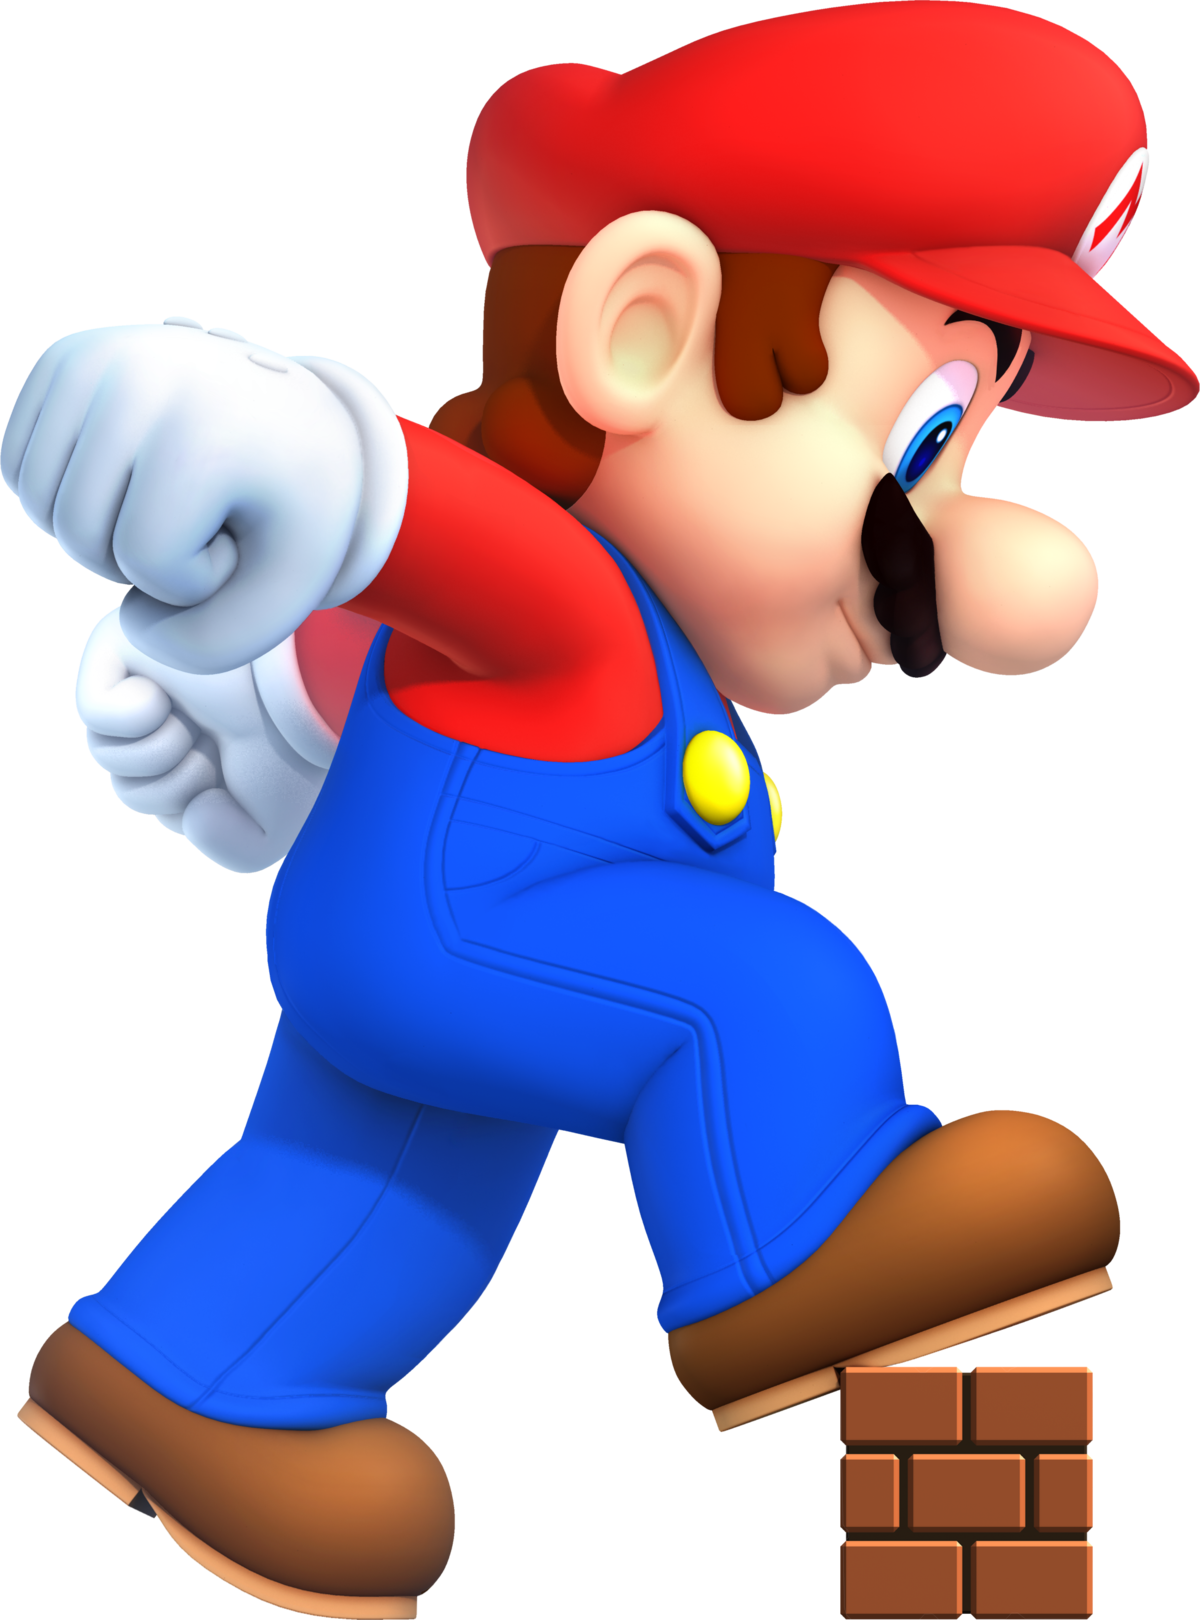 Super Mario 64 (Game) - Giant Bomb